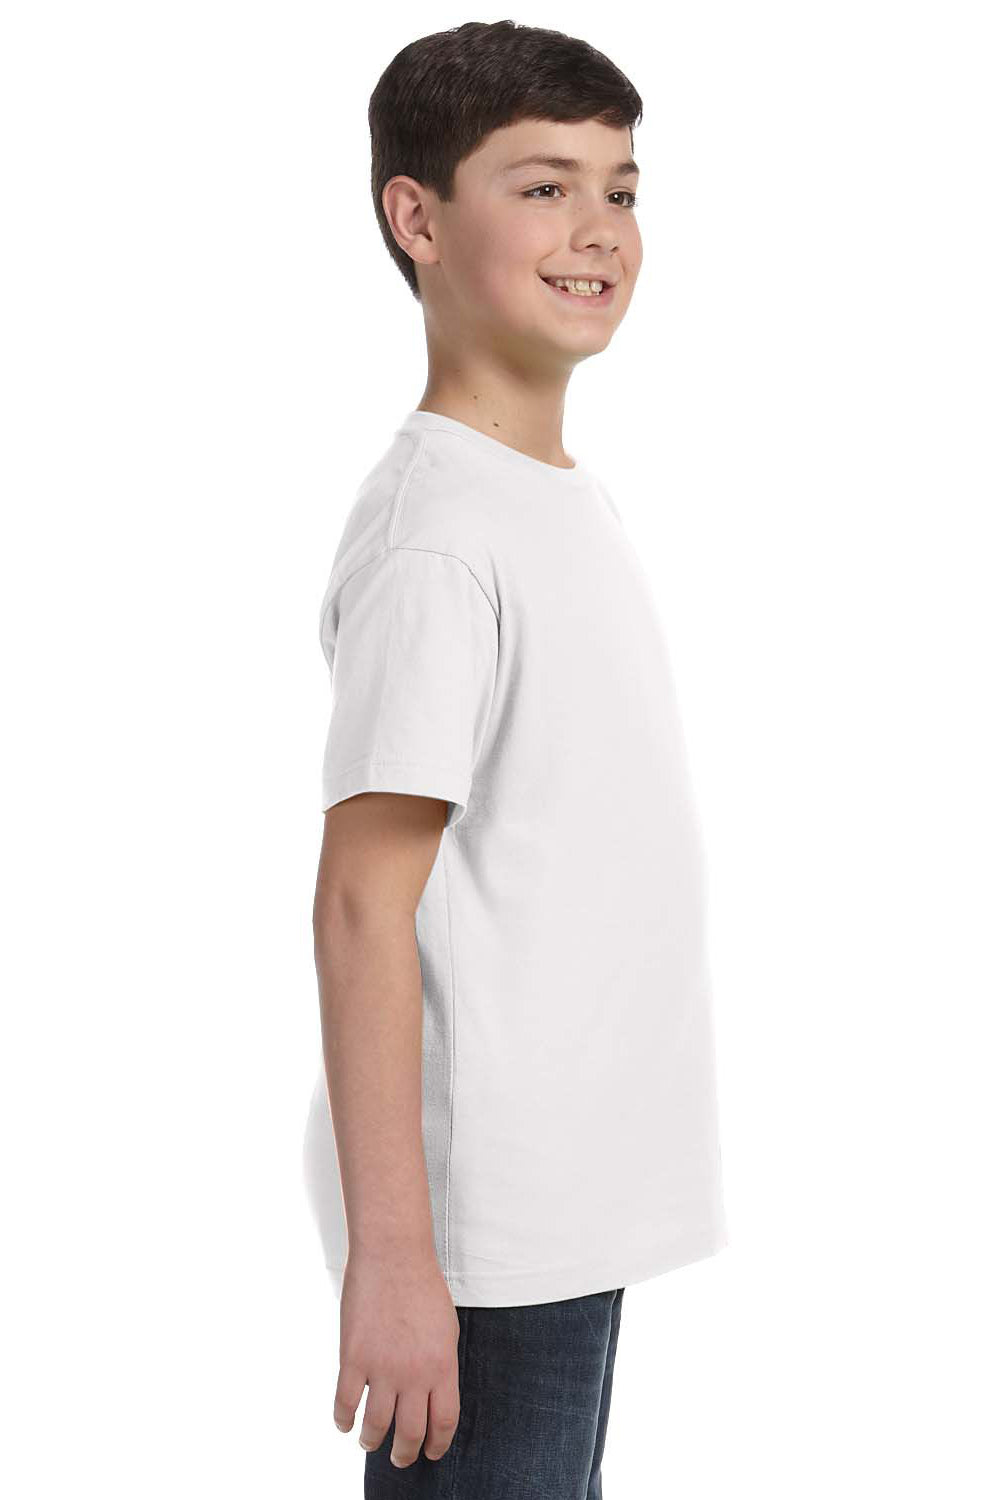 LAT 6101 Youth Fine Jersey Short Sleeve Crewneck T-Shirt White Side